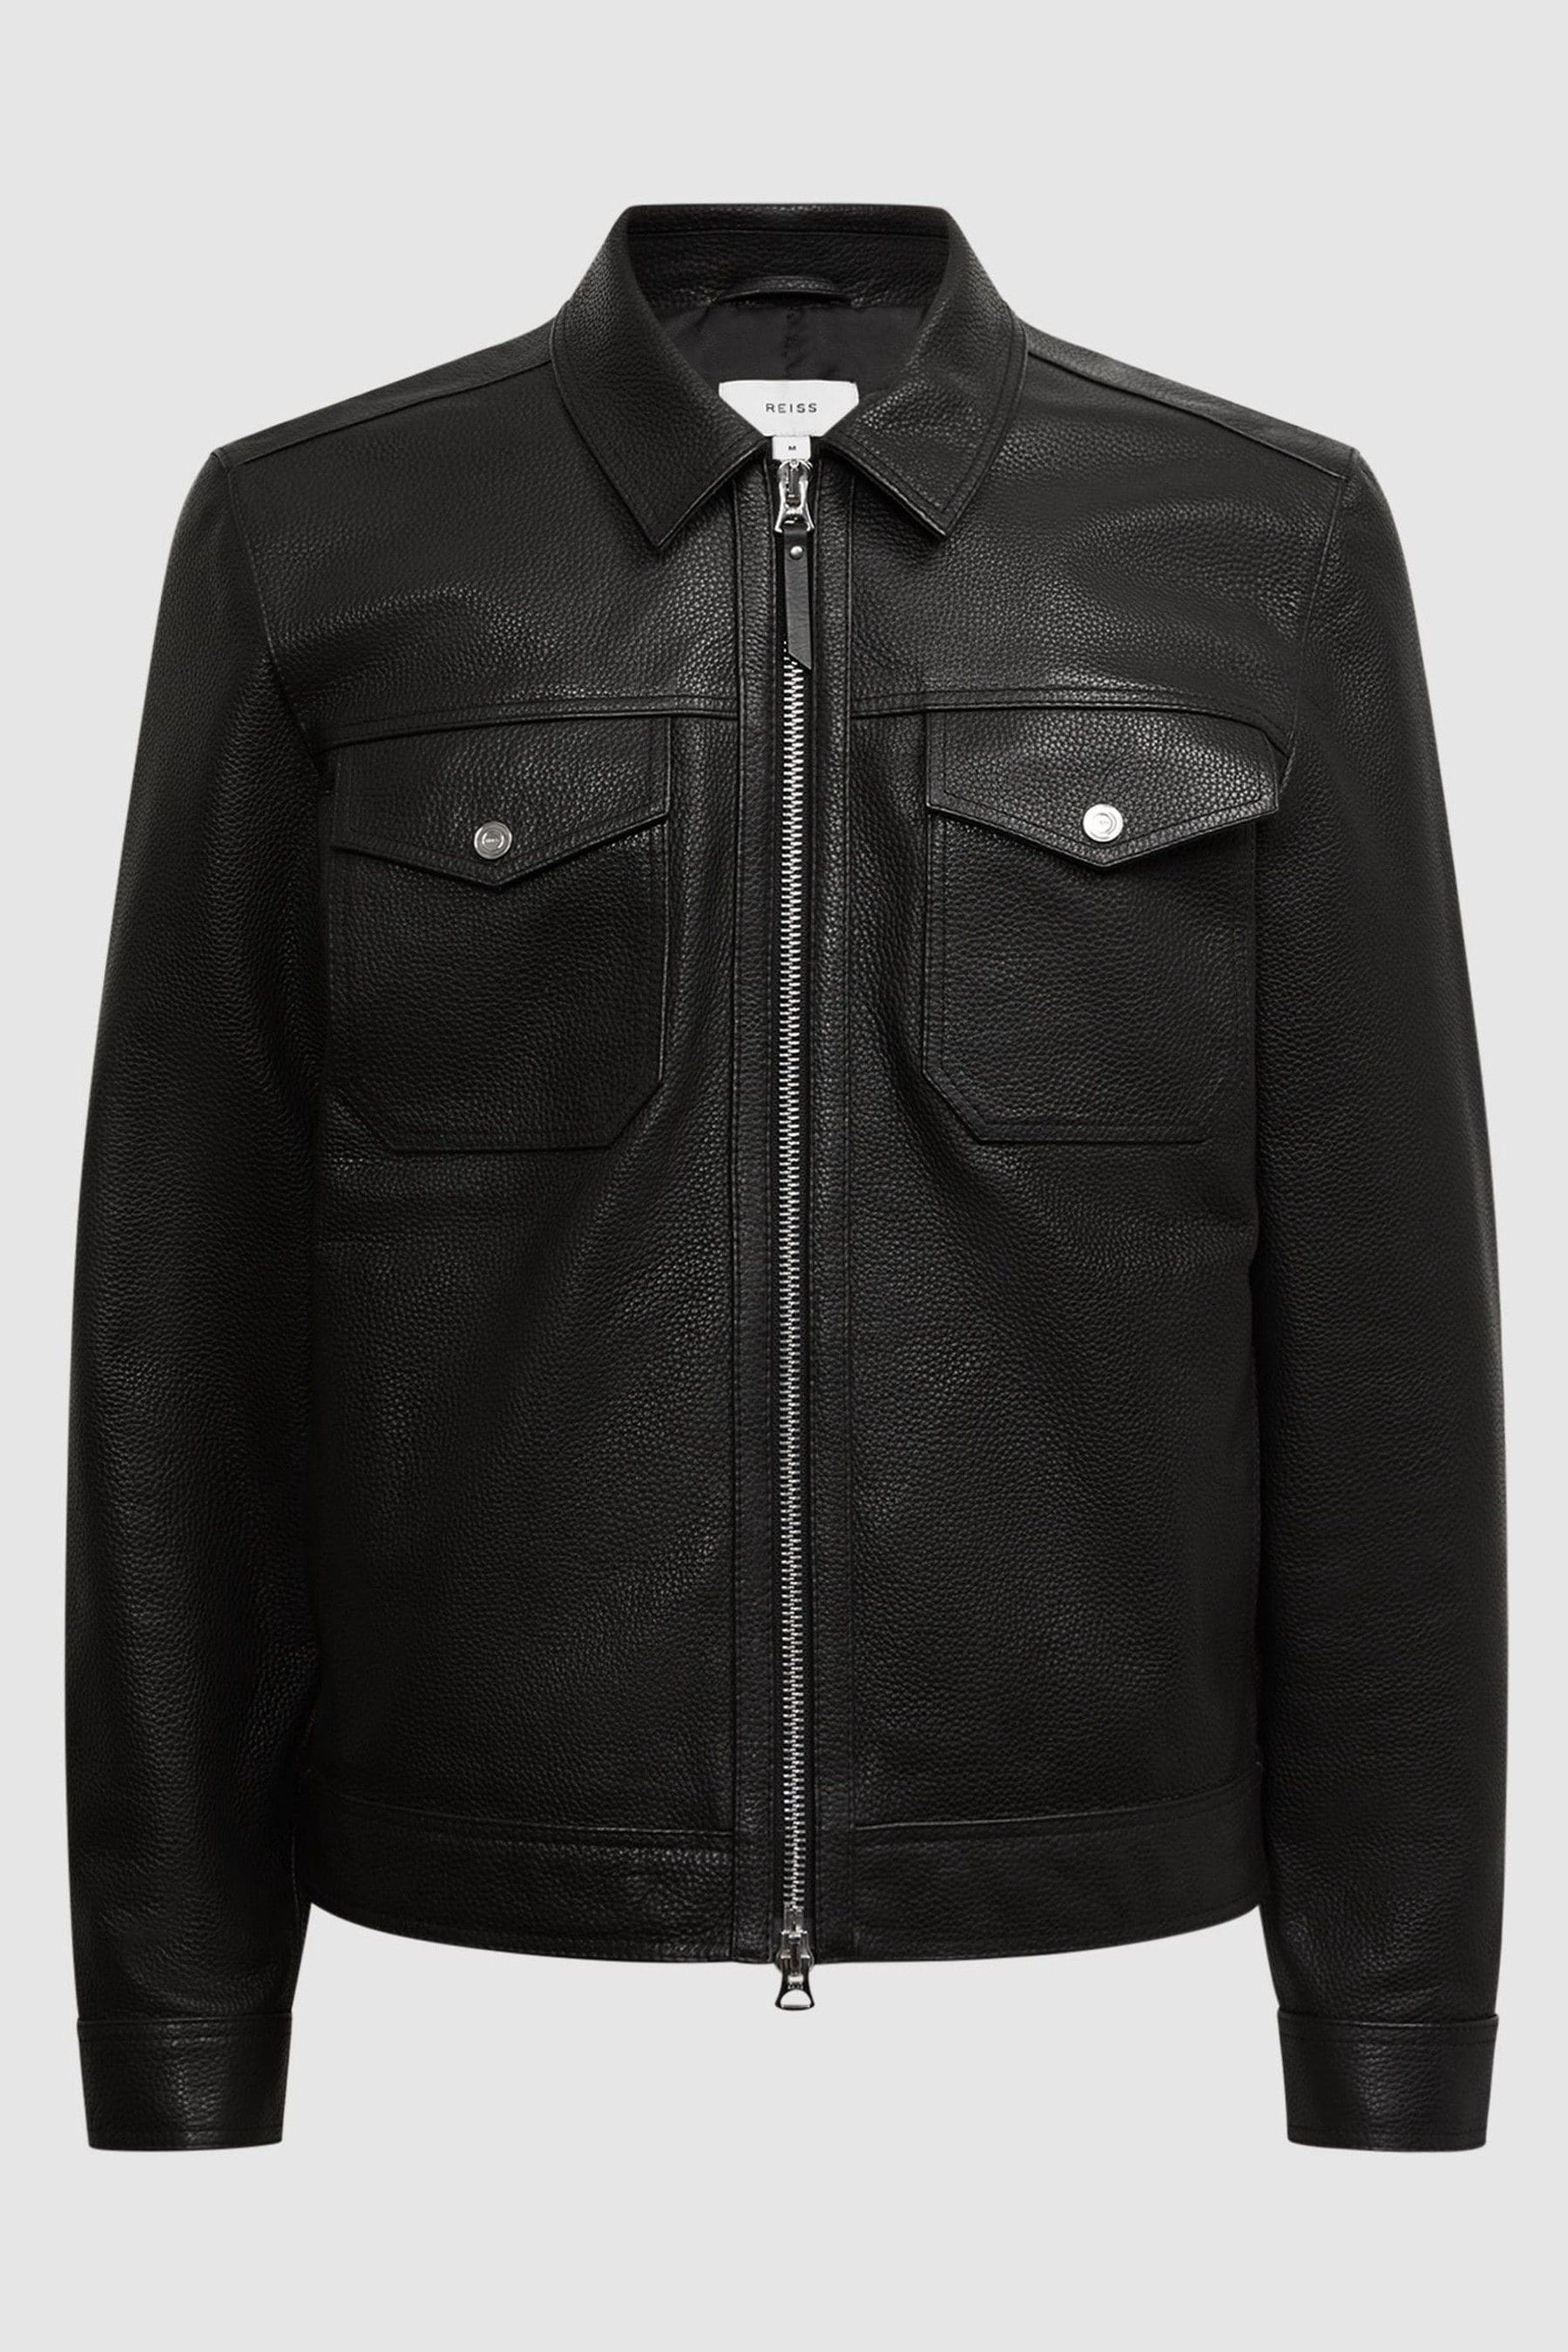 Buy Reiss Black Carp Leather Zip Through Jacket from the Next UK online ...